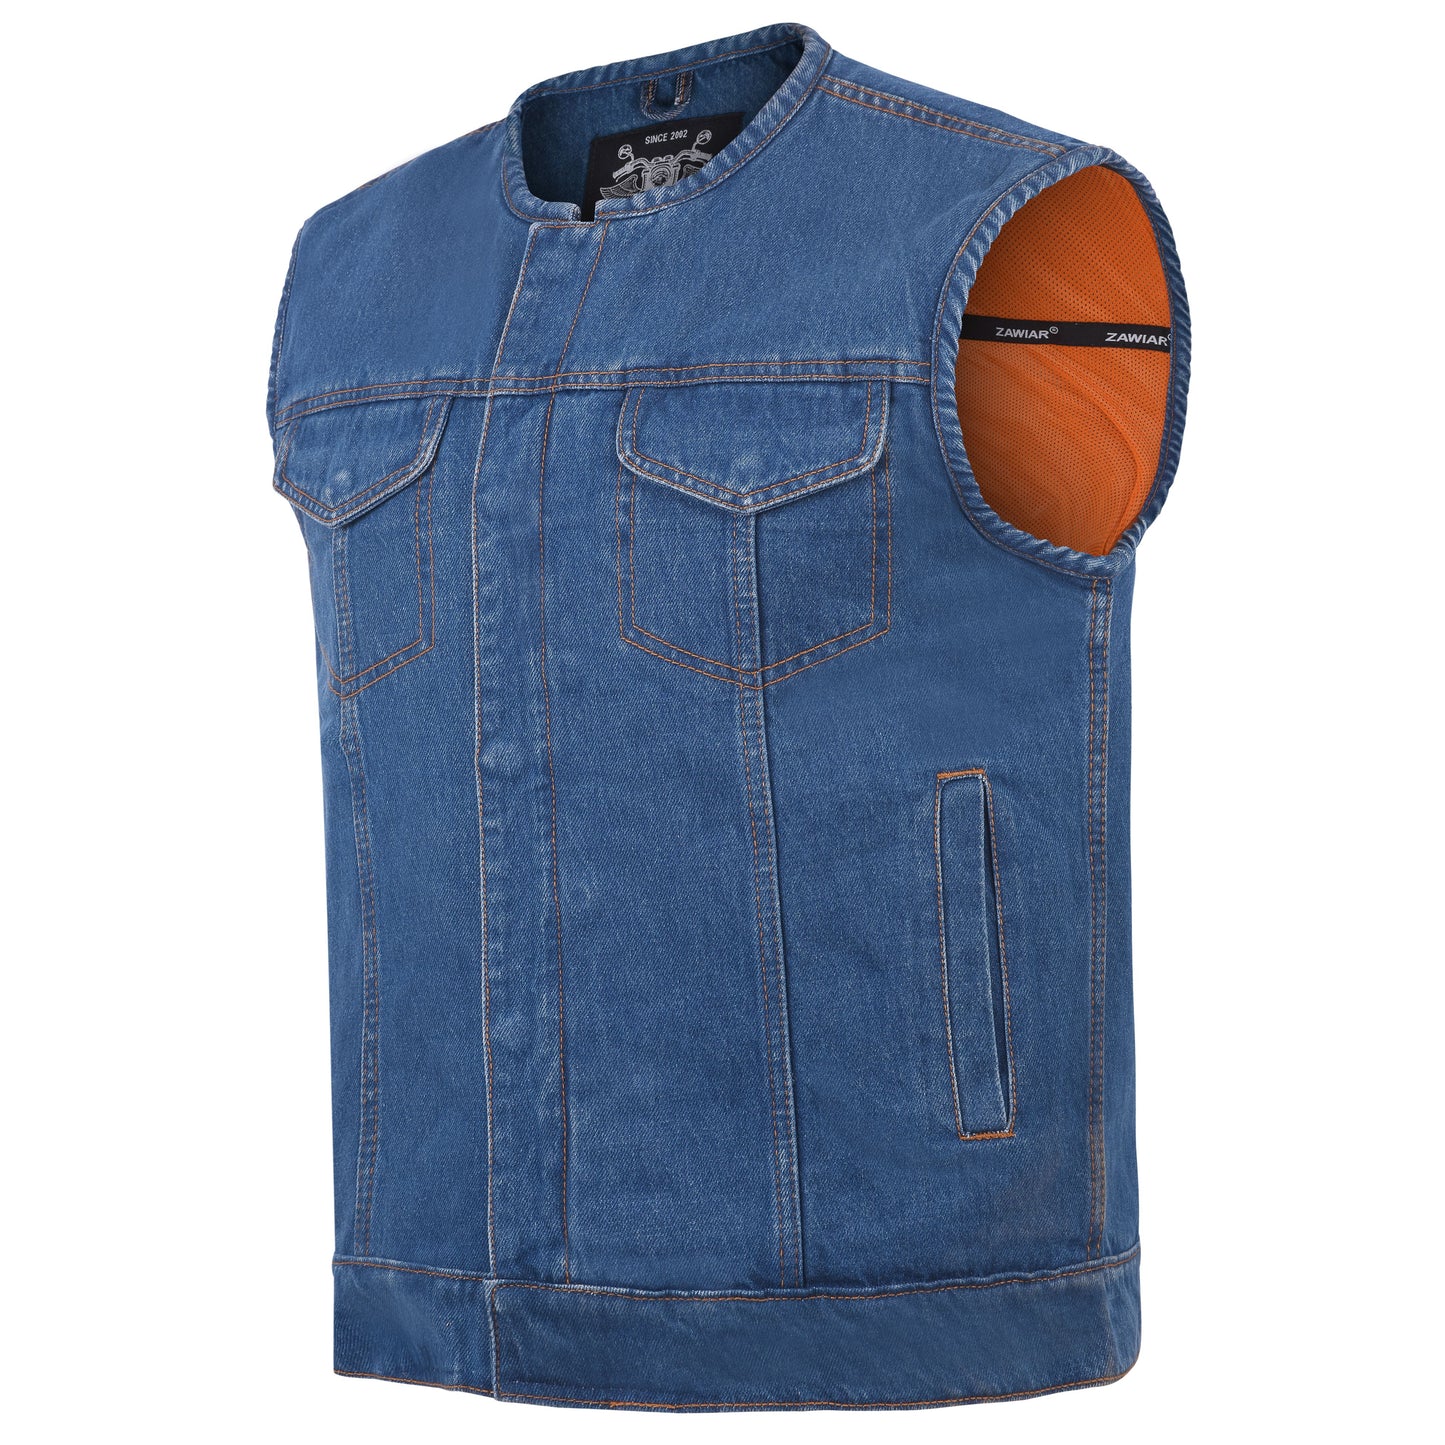 ZAWIAR Mens Blue Denim Classic Club Style Motorcycle Waistcoat Vest for Bikers